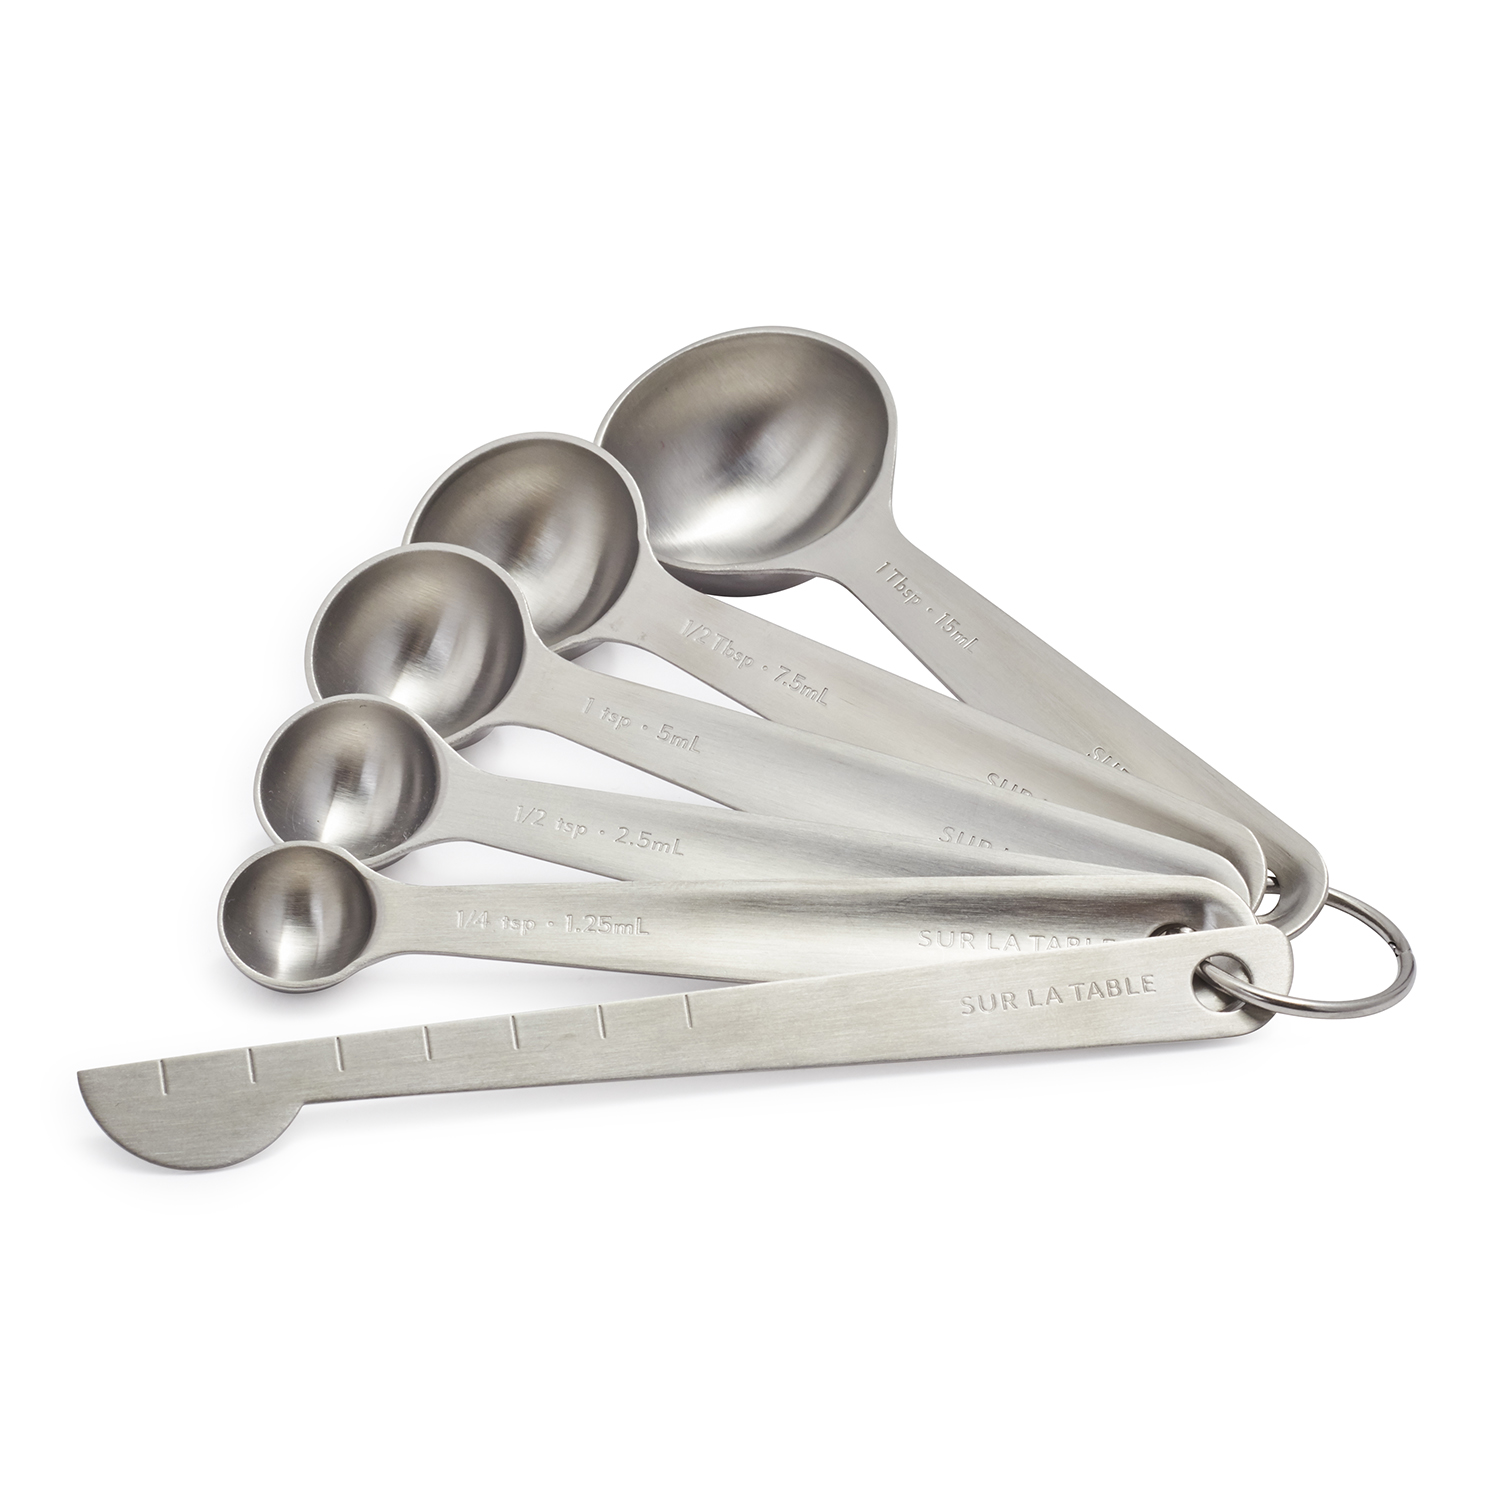 Measuring Spoon Set Of 9 Stainless Steel Cooking Baking Teaspoon Tablespoon